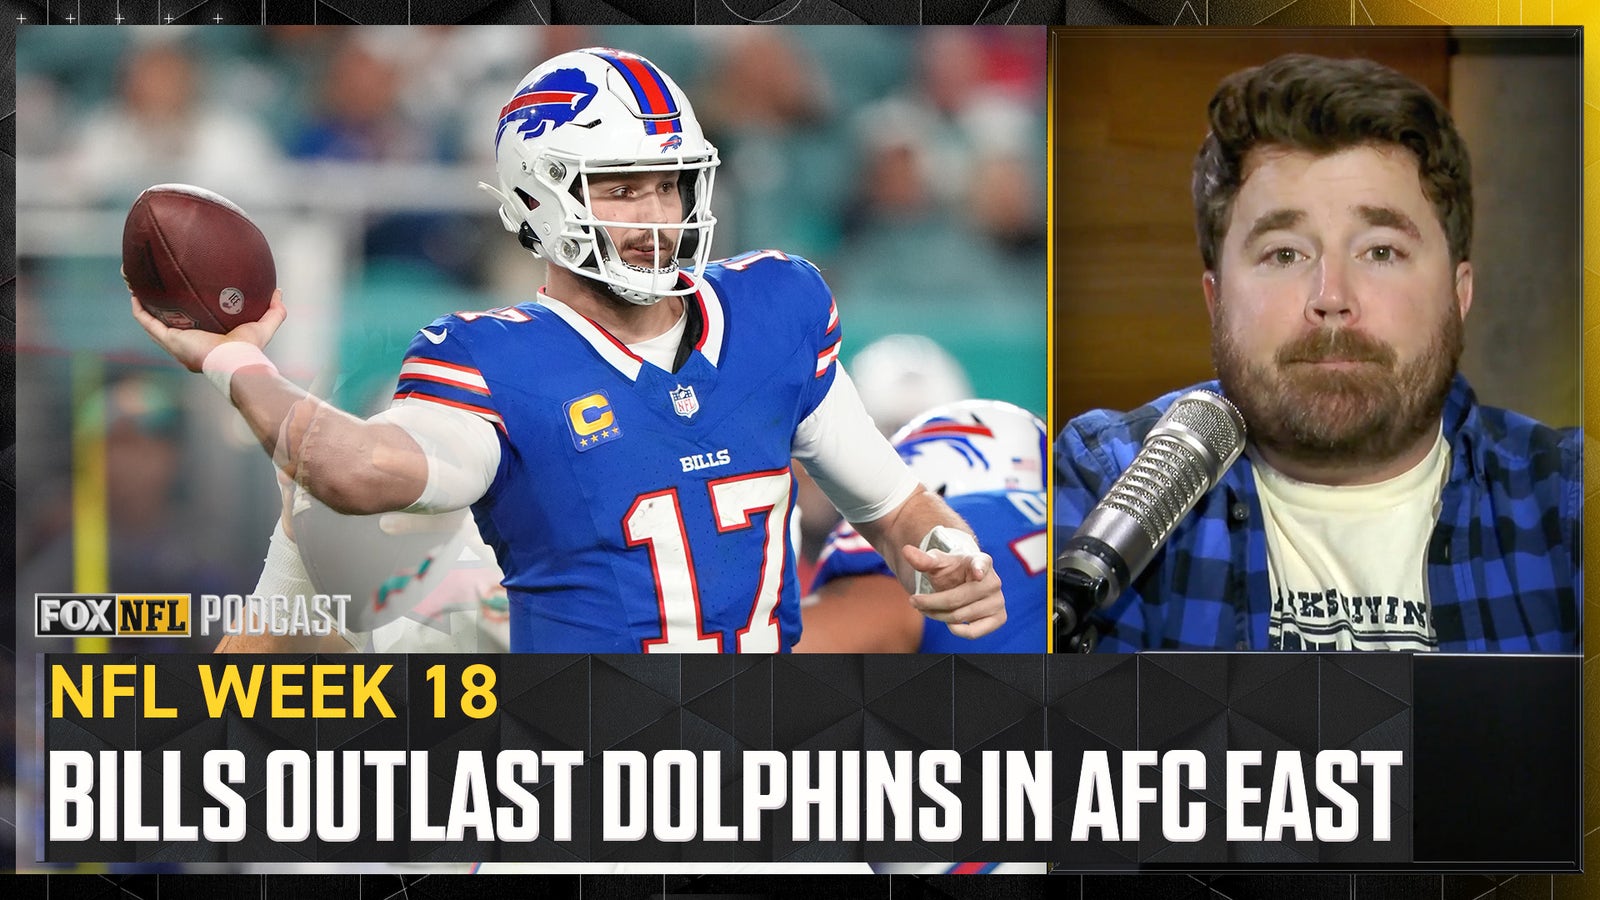 Will the Bills or Dolphins make a deeper postseason run?